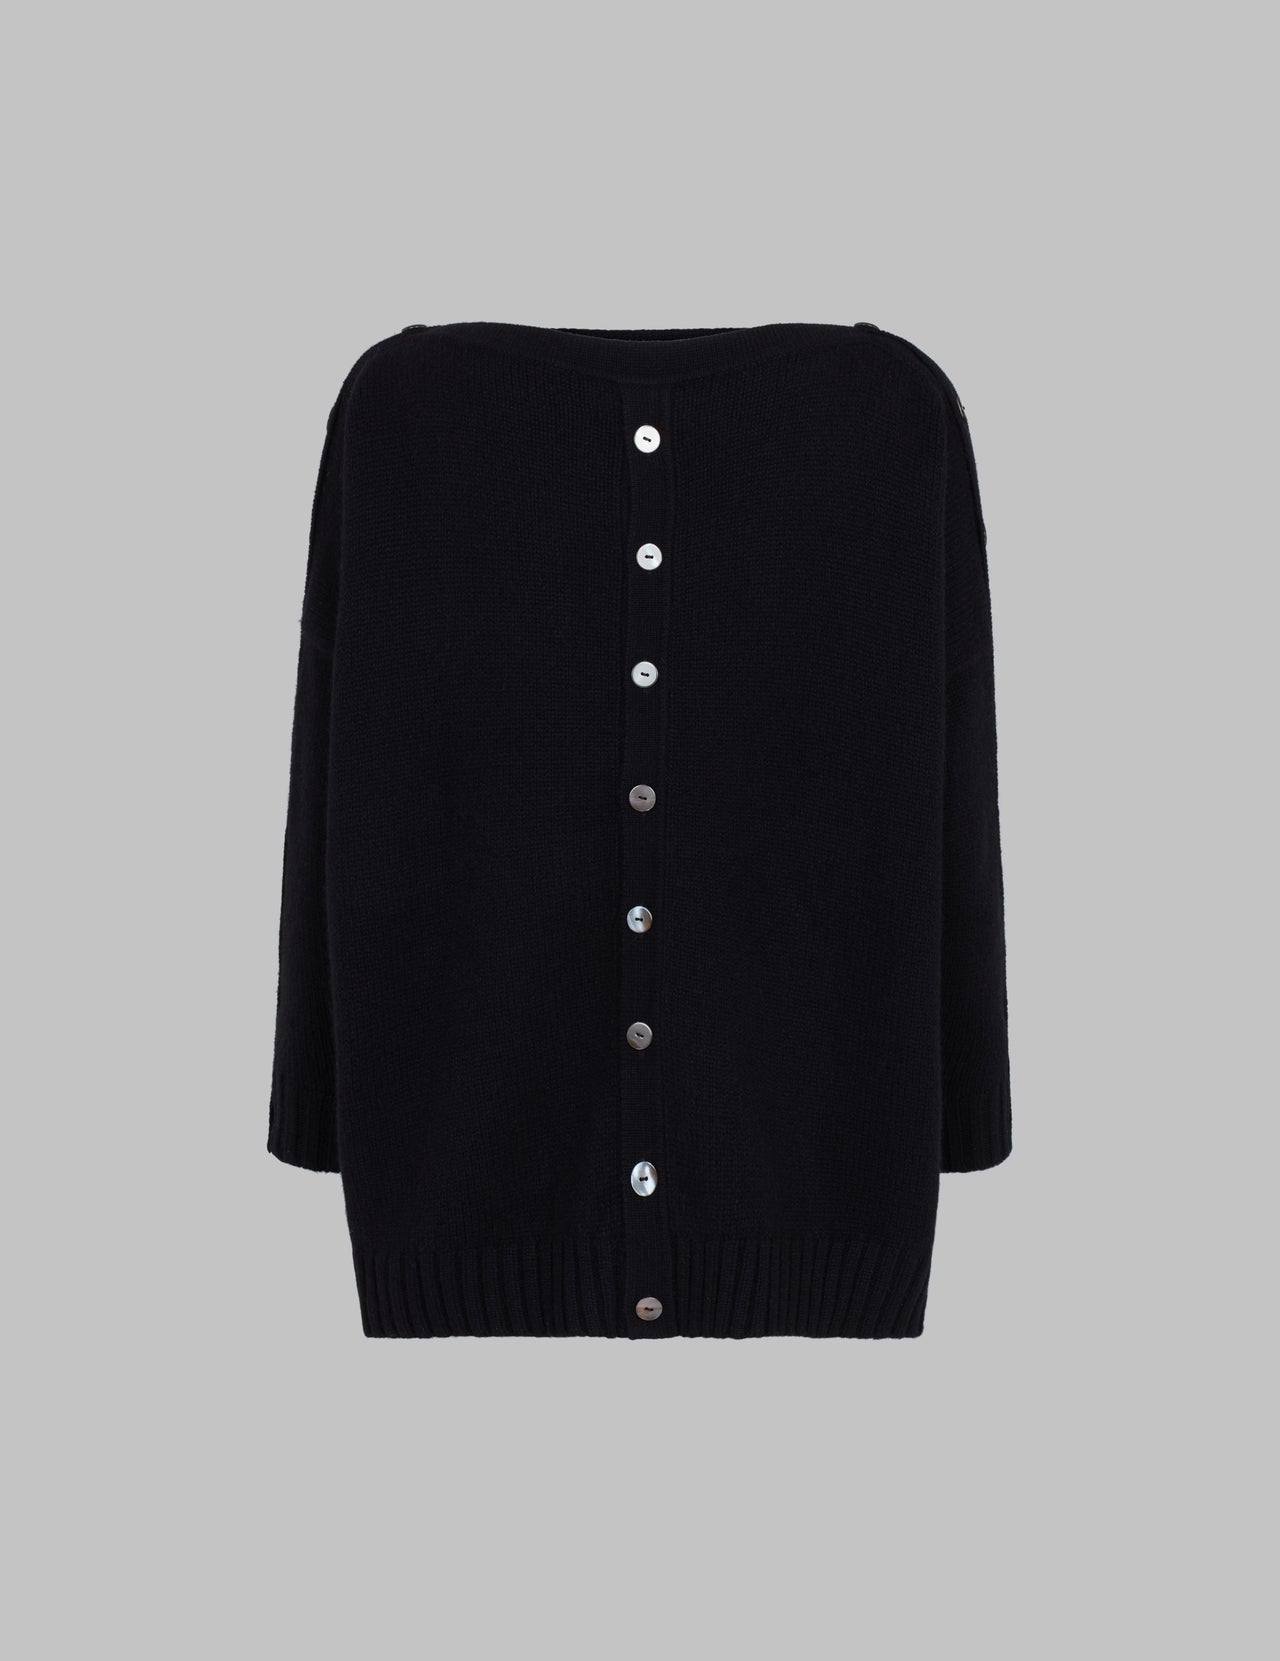  Black Cashmere Button Boat Neck Sweater 